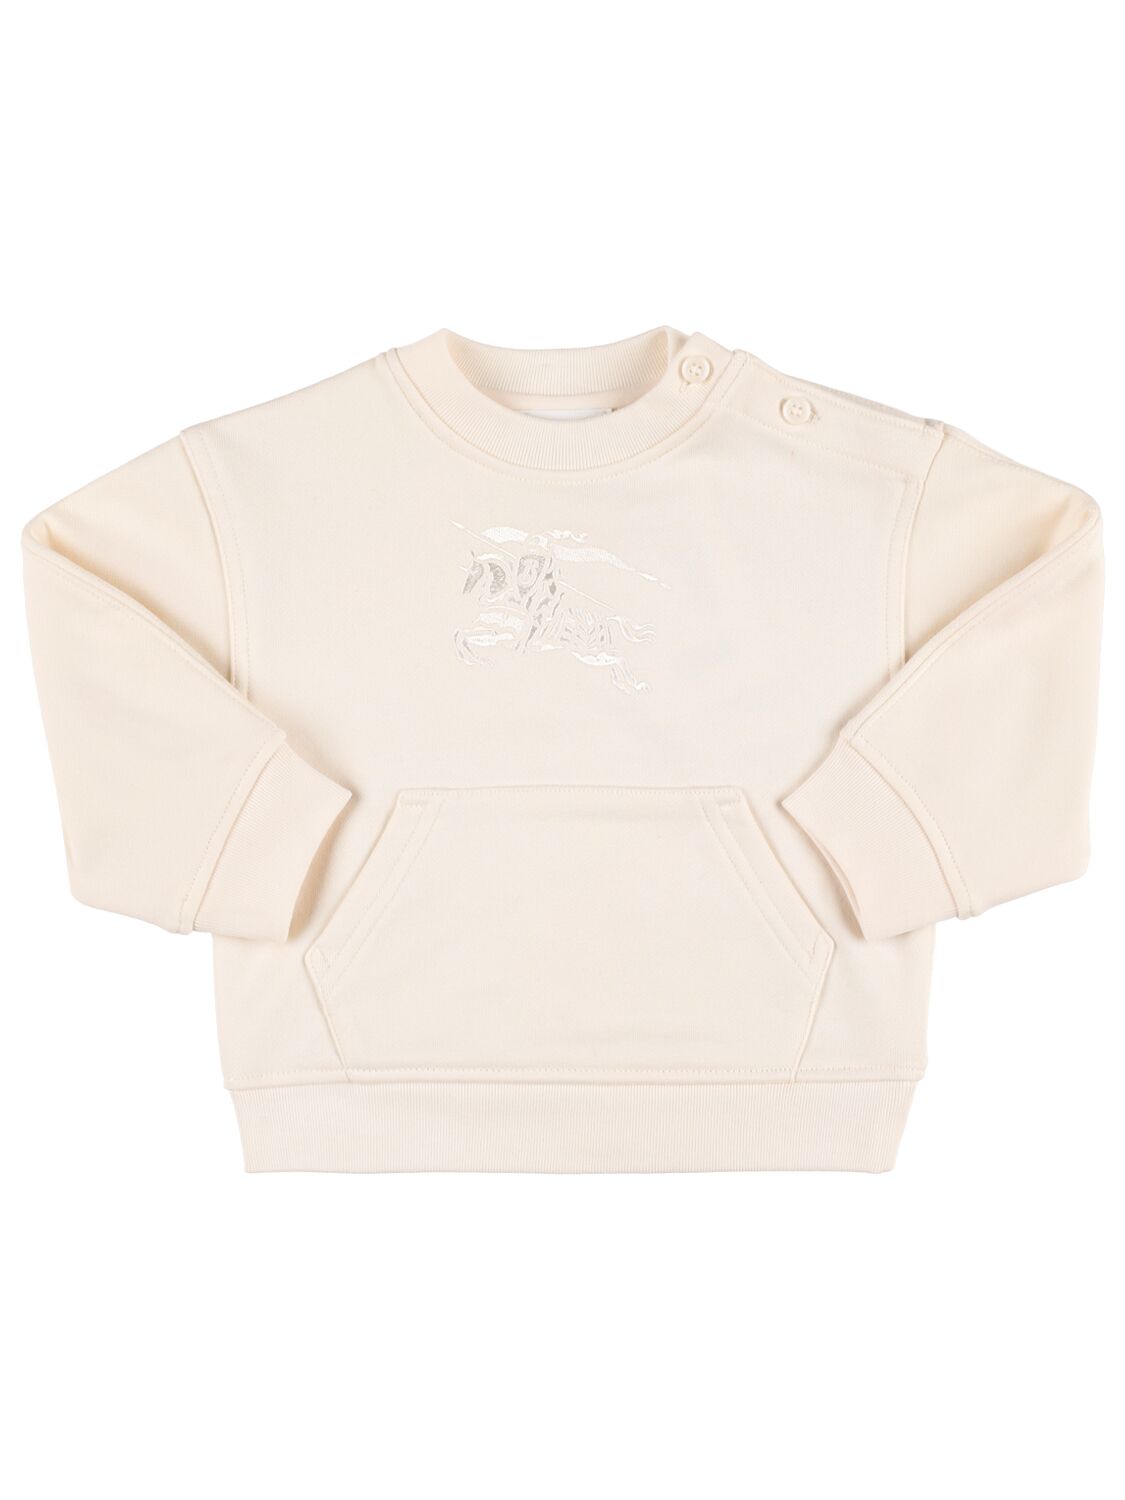 Burberry Kids' Girl's Lora Equestrian Knight Design Embroidered Sweatshirt In Pale Cream